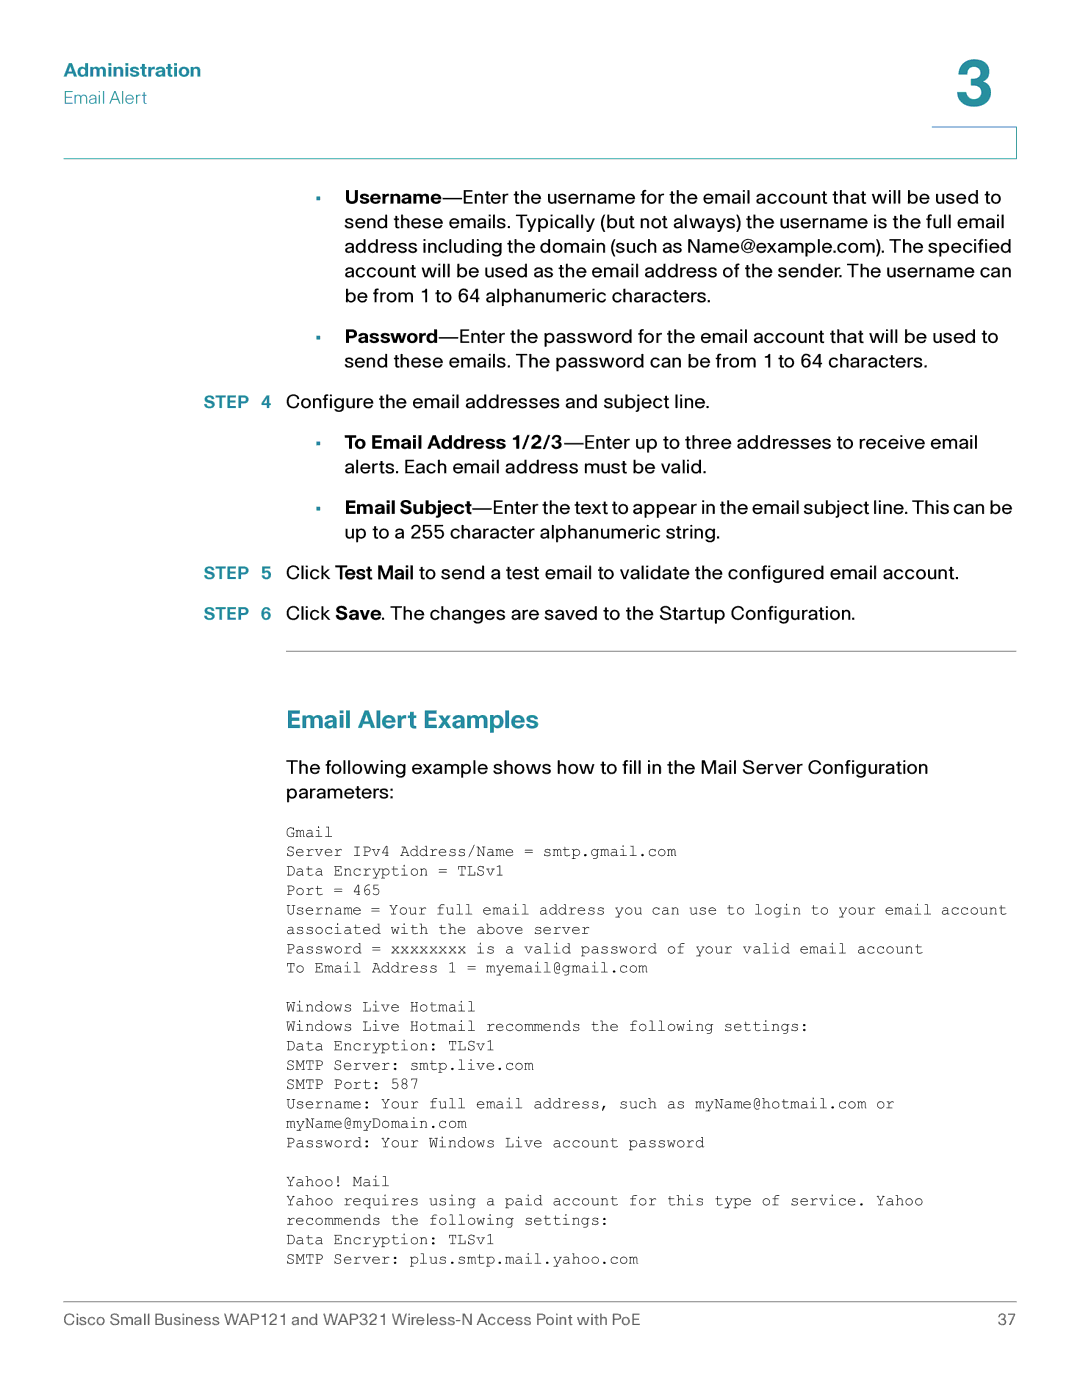 Cisco Systems WAP321, WAP121 manual Email Alert Examples 